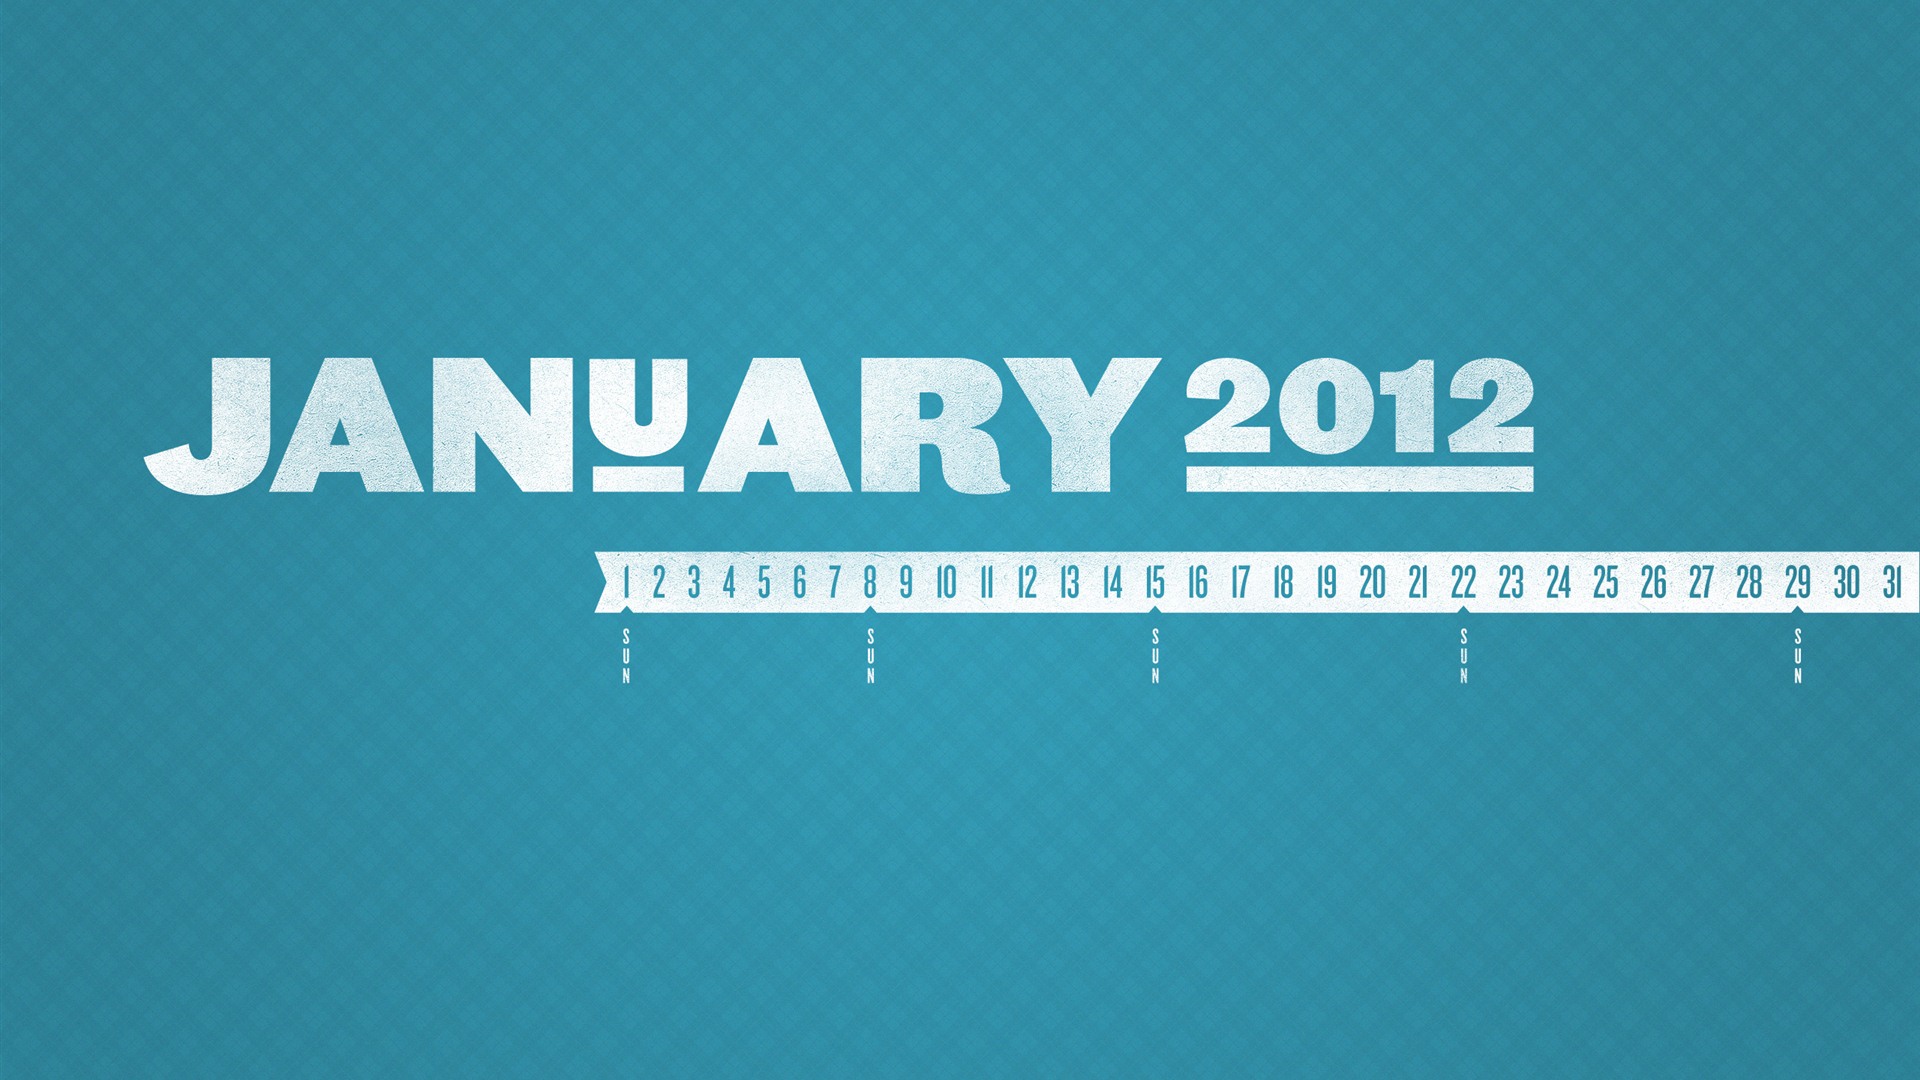 January 2012 Calendar Wallpapers #19 - 1920x1080